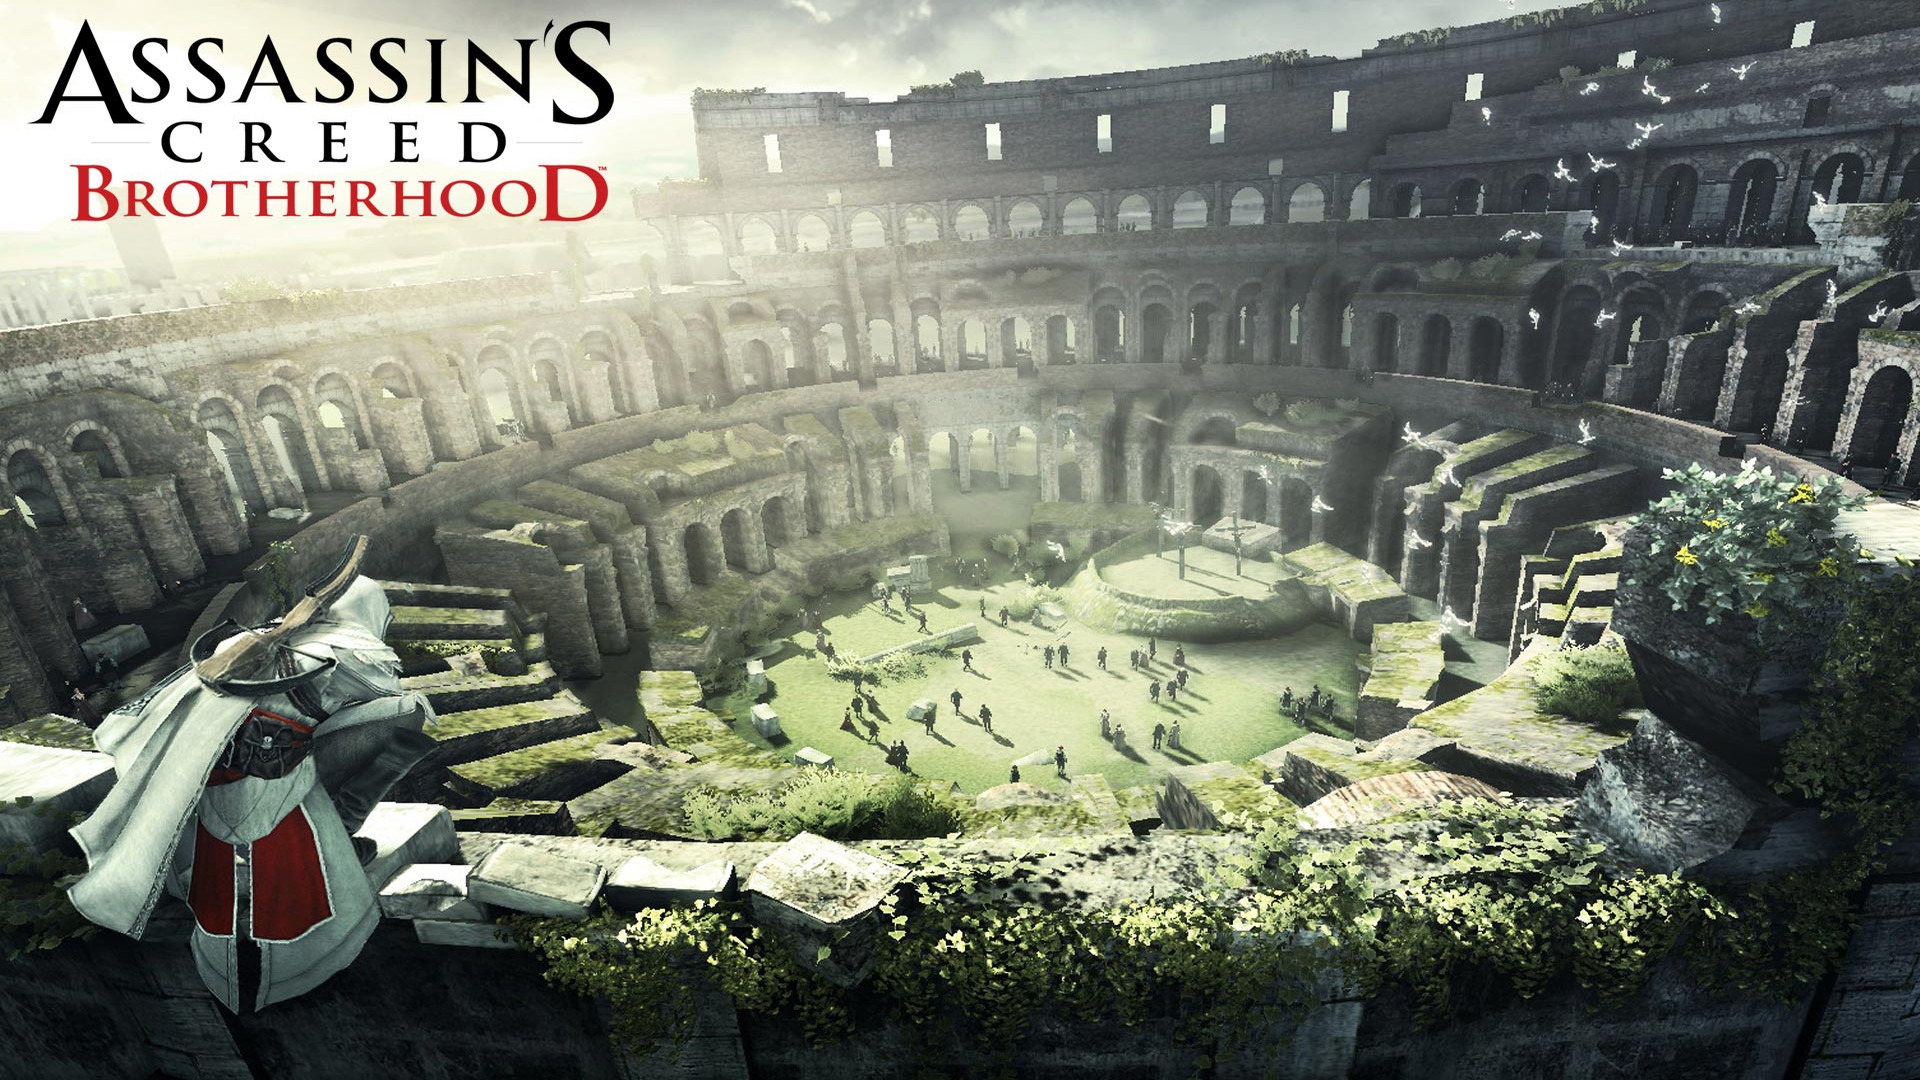 Assassins Creed Brotherhood for 1920 x 1080 HDTV 1080p resolution